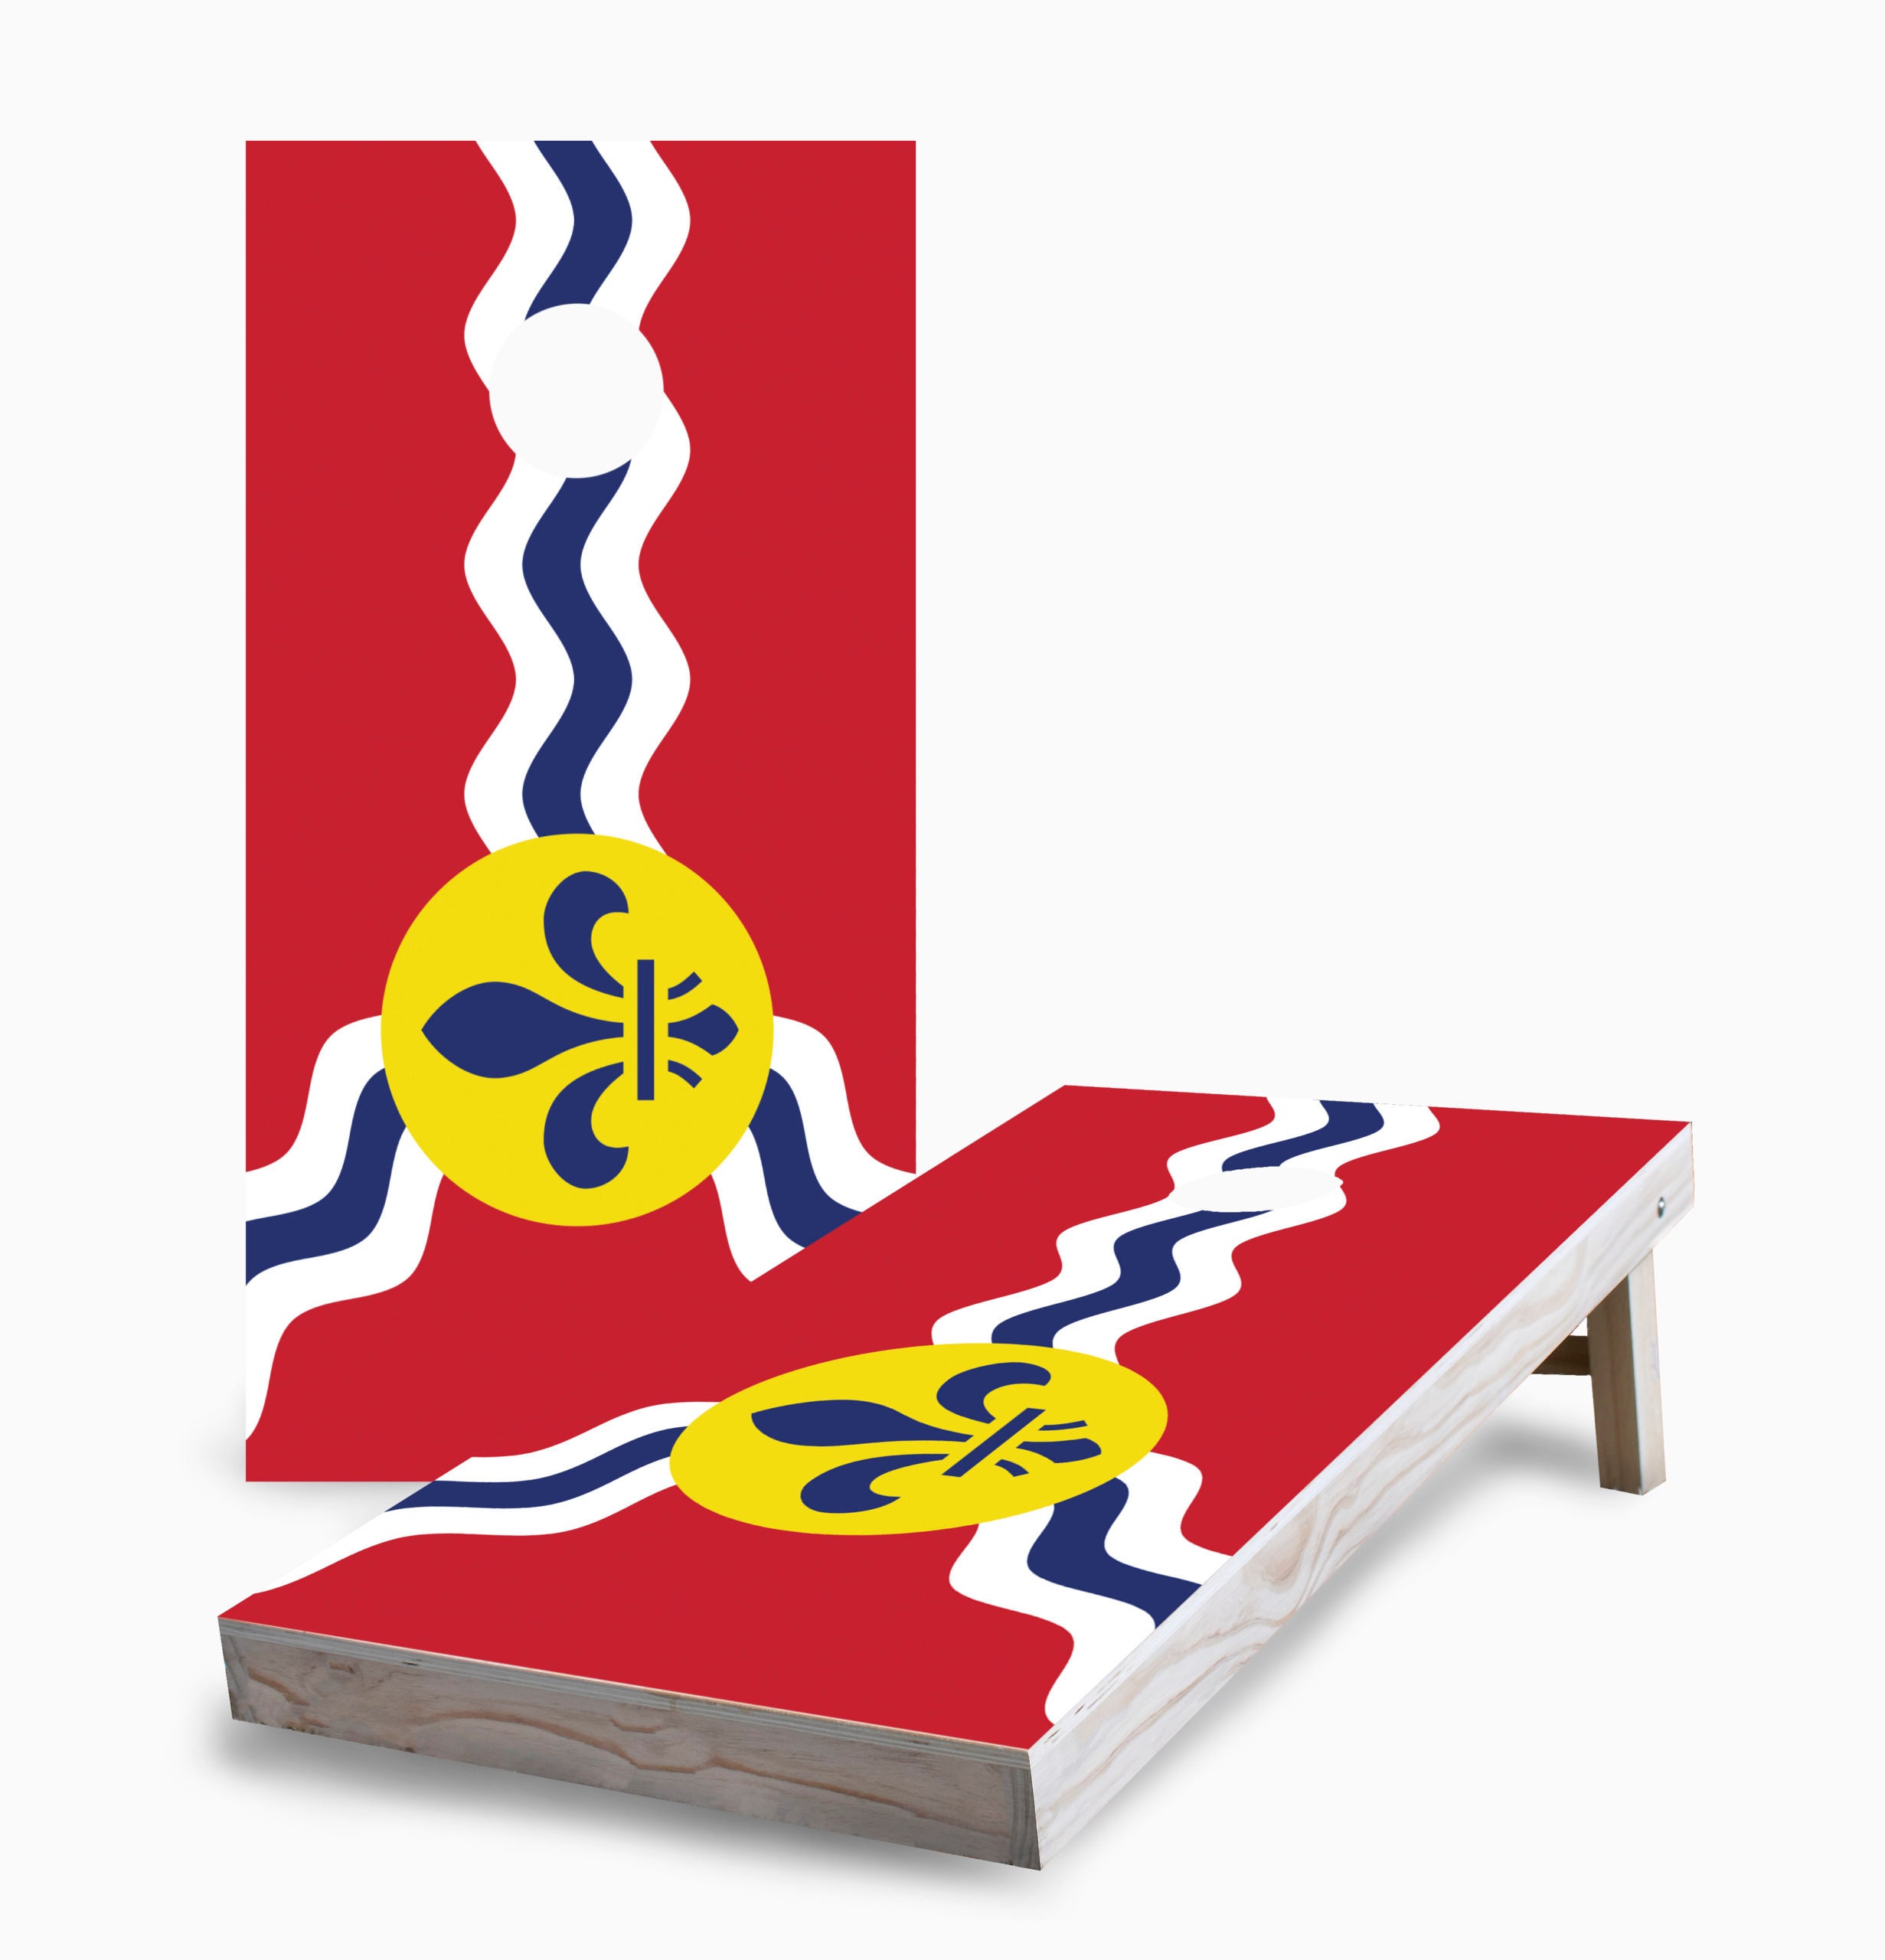 St. Louis Cardinals 2' x 4' Rosewood Cornhole Board Set